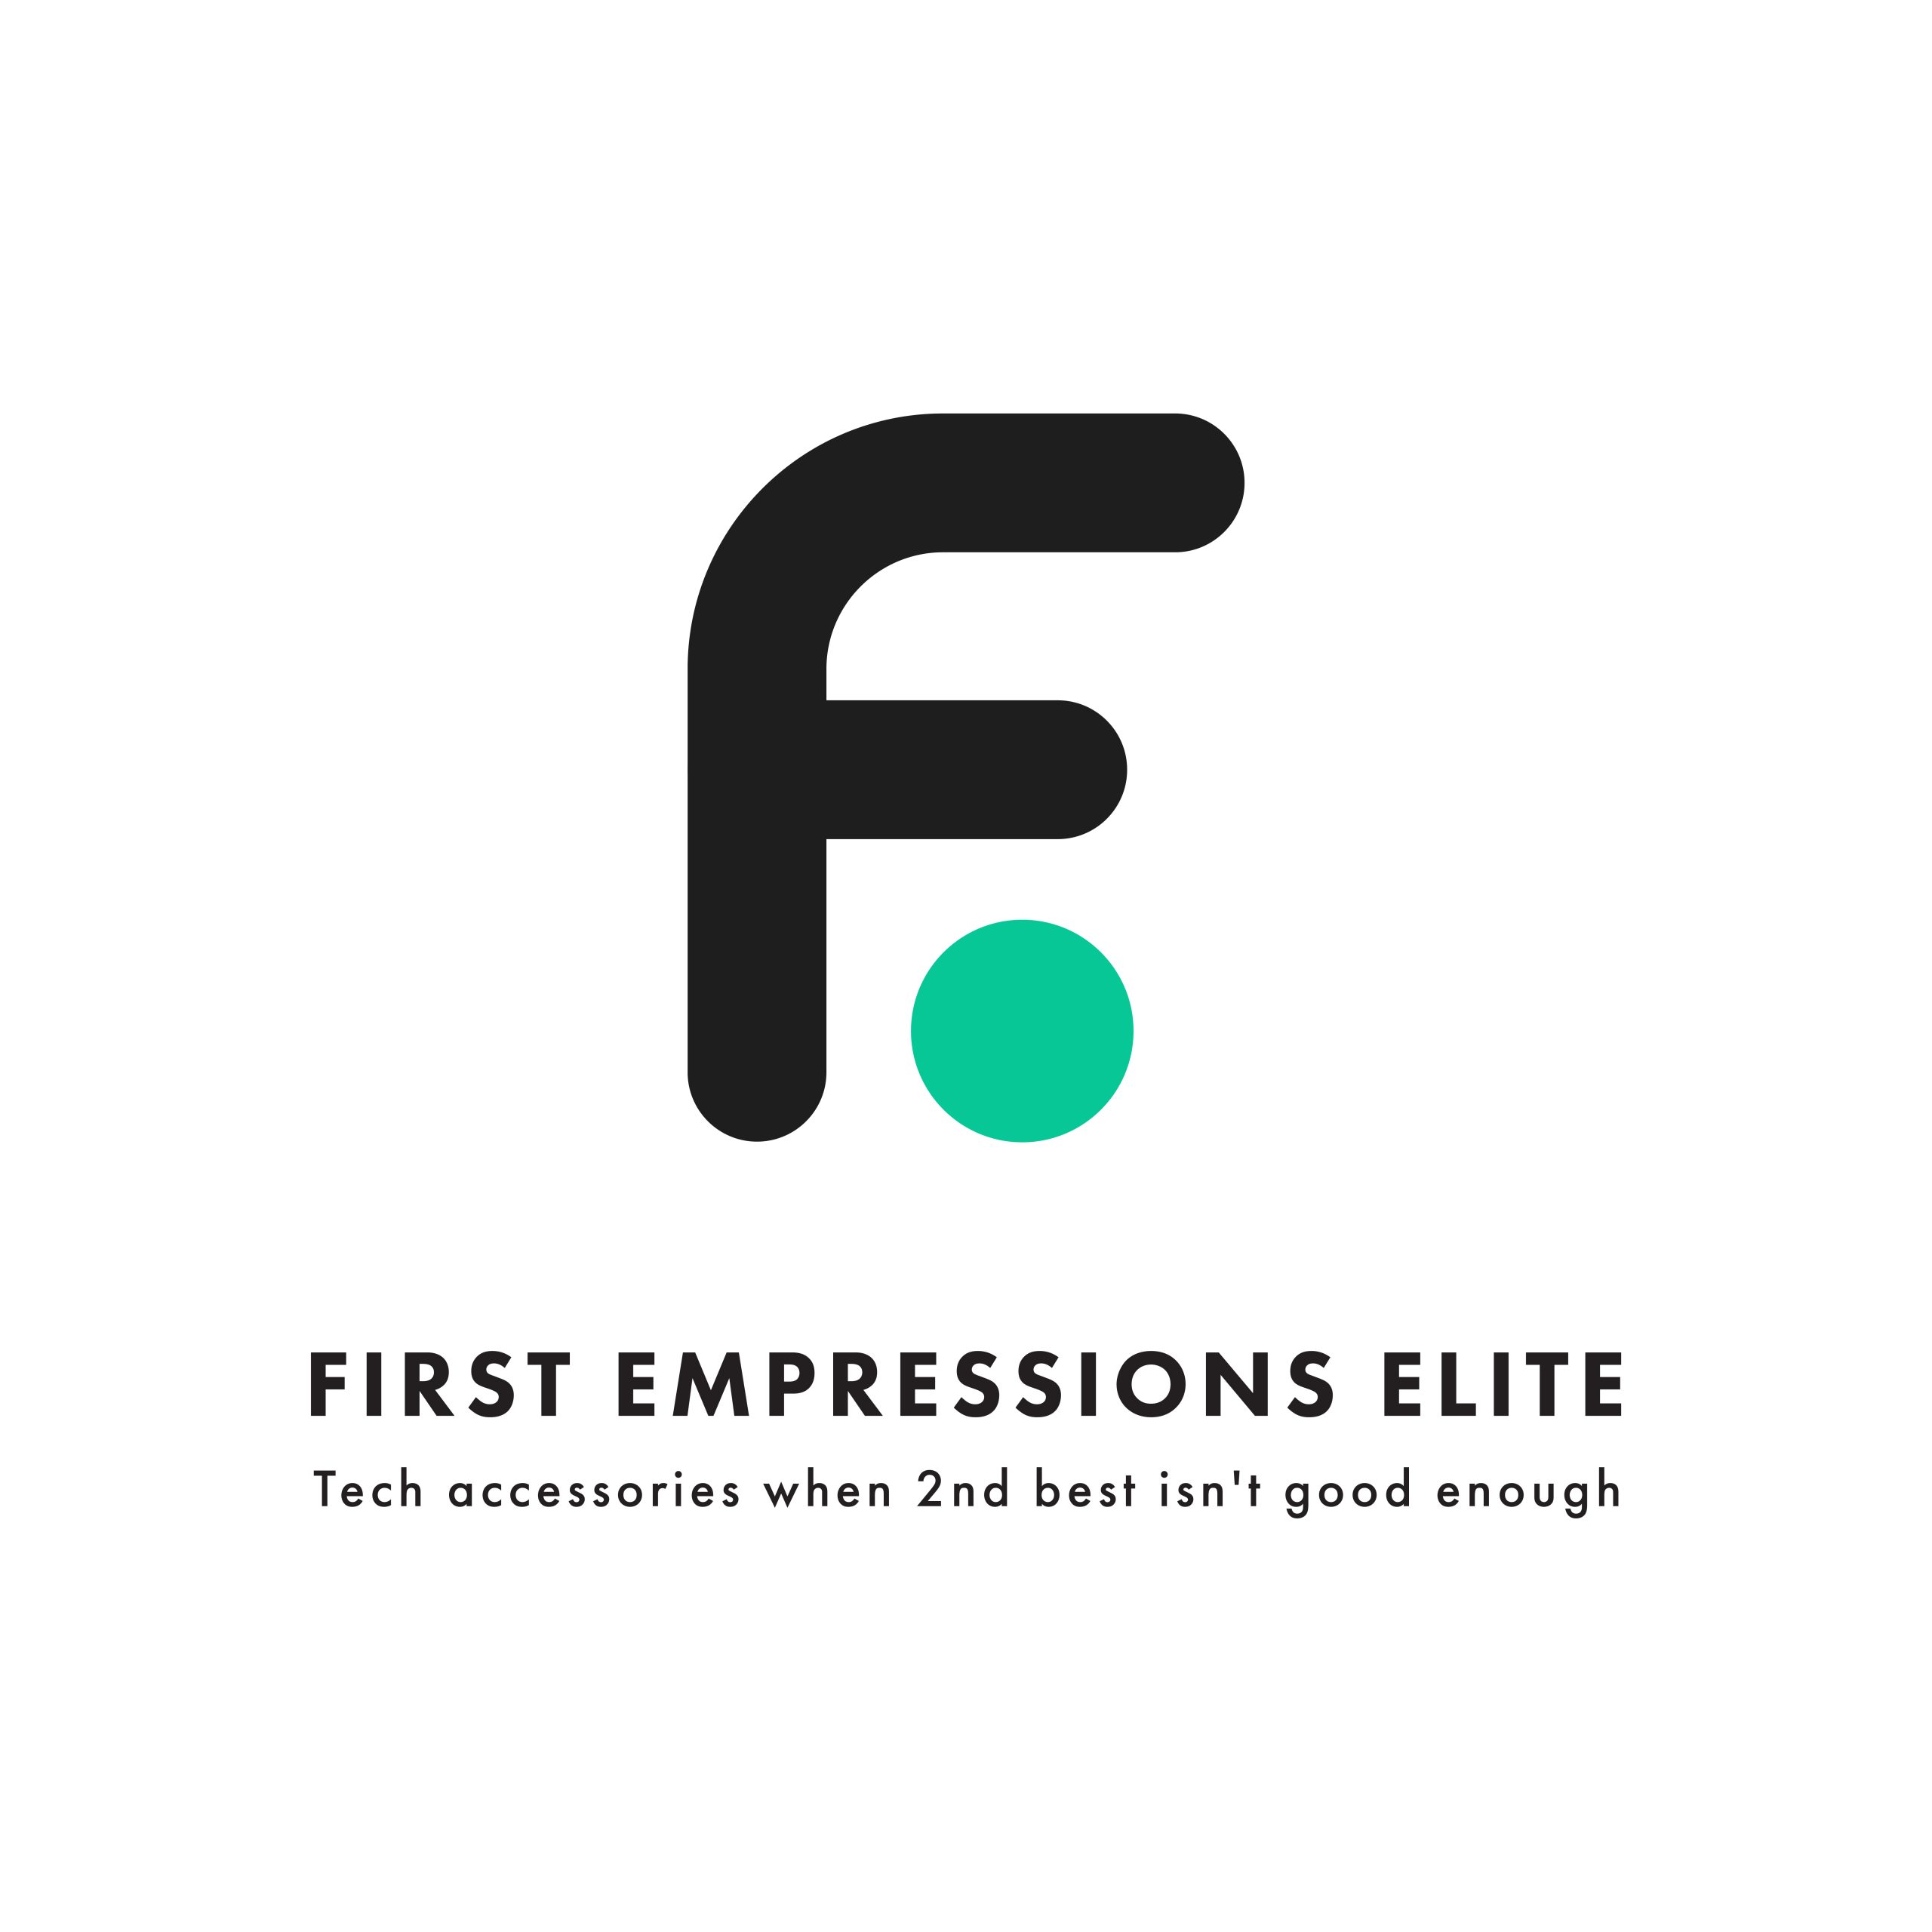 First Empressions Elite